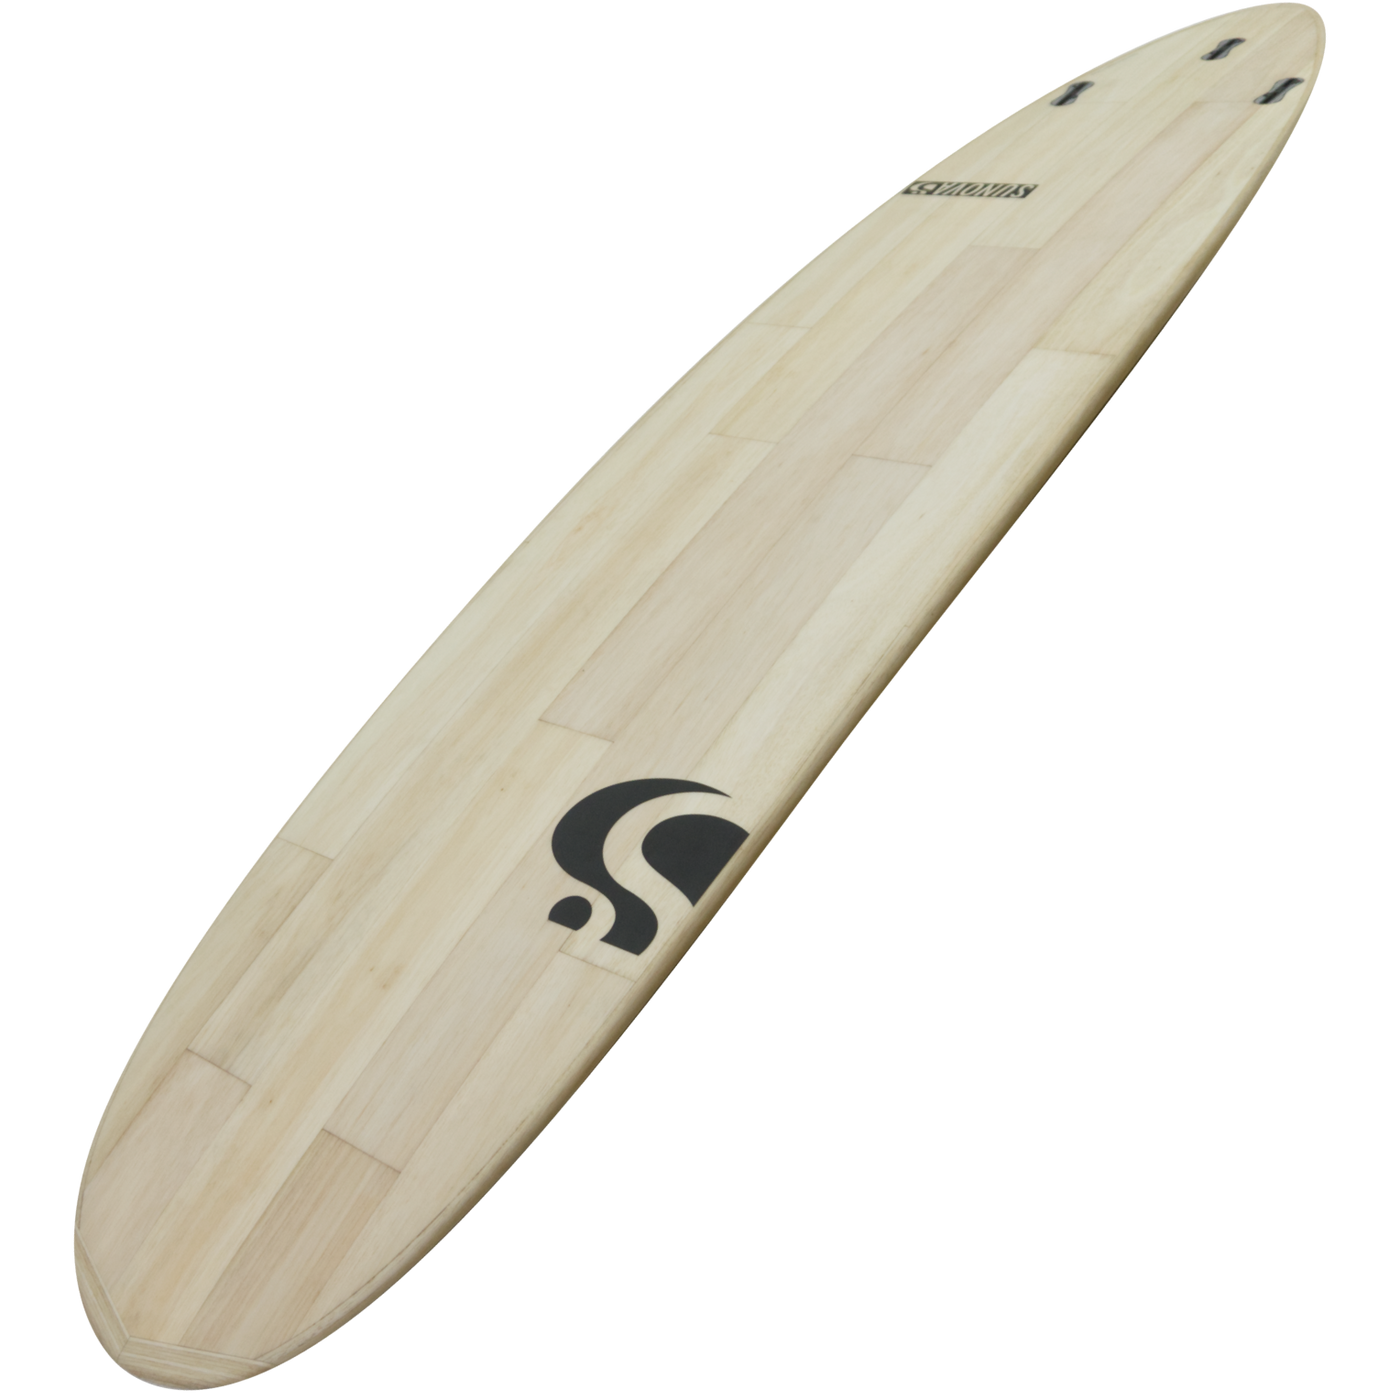 Harries Pro Surfboard 9'1"